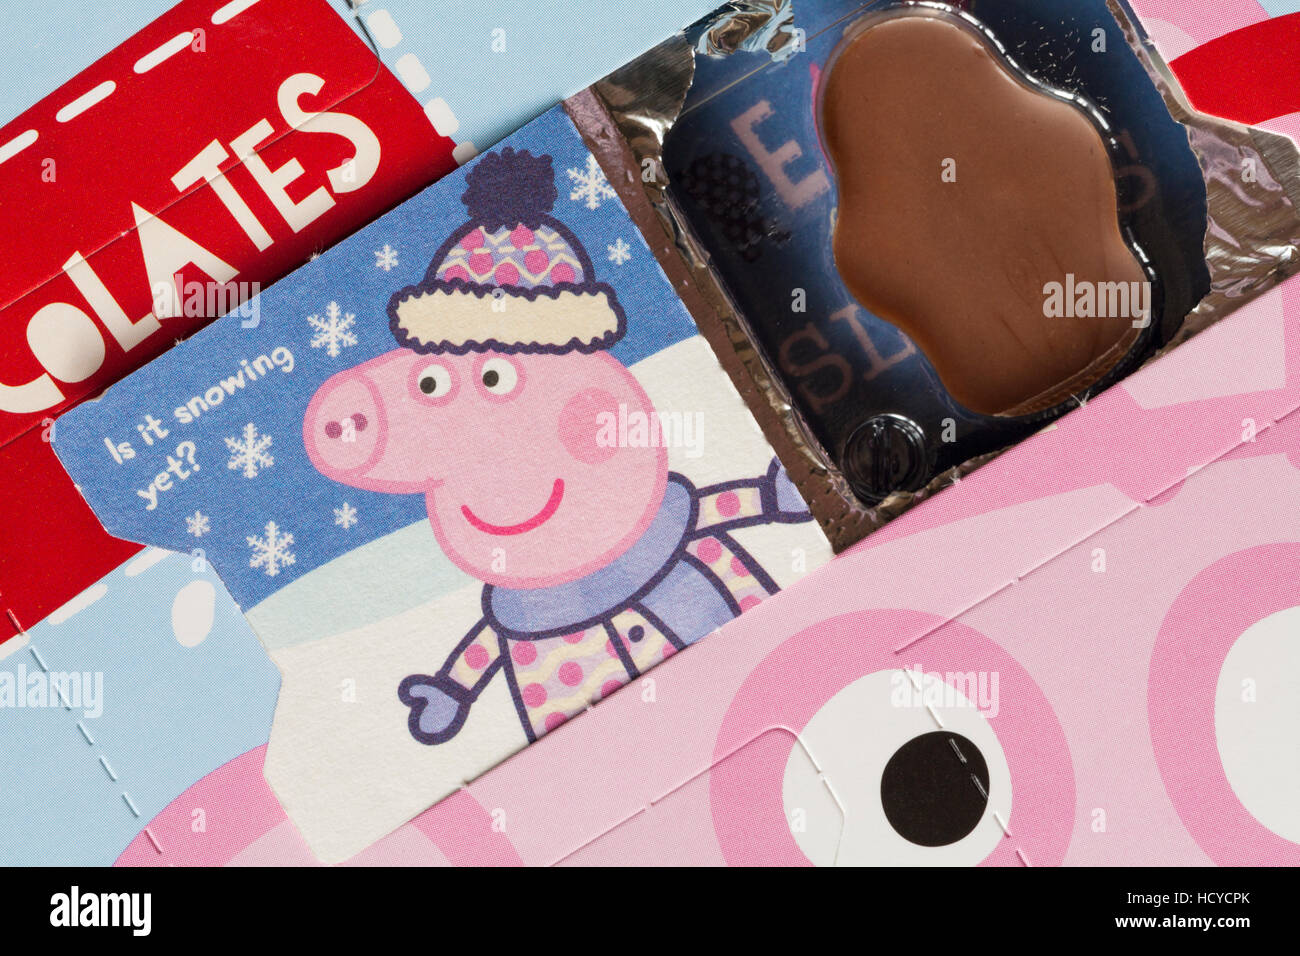 https://c8.alamy.com/comp/HCYCPK/detail-of-kinnerton-milk-chocolate-peppa-pig-advent-calendar-showing-HCYCPK.jpg